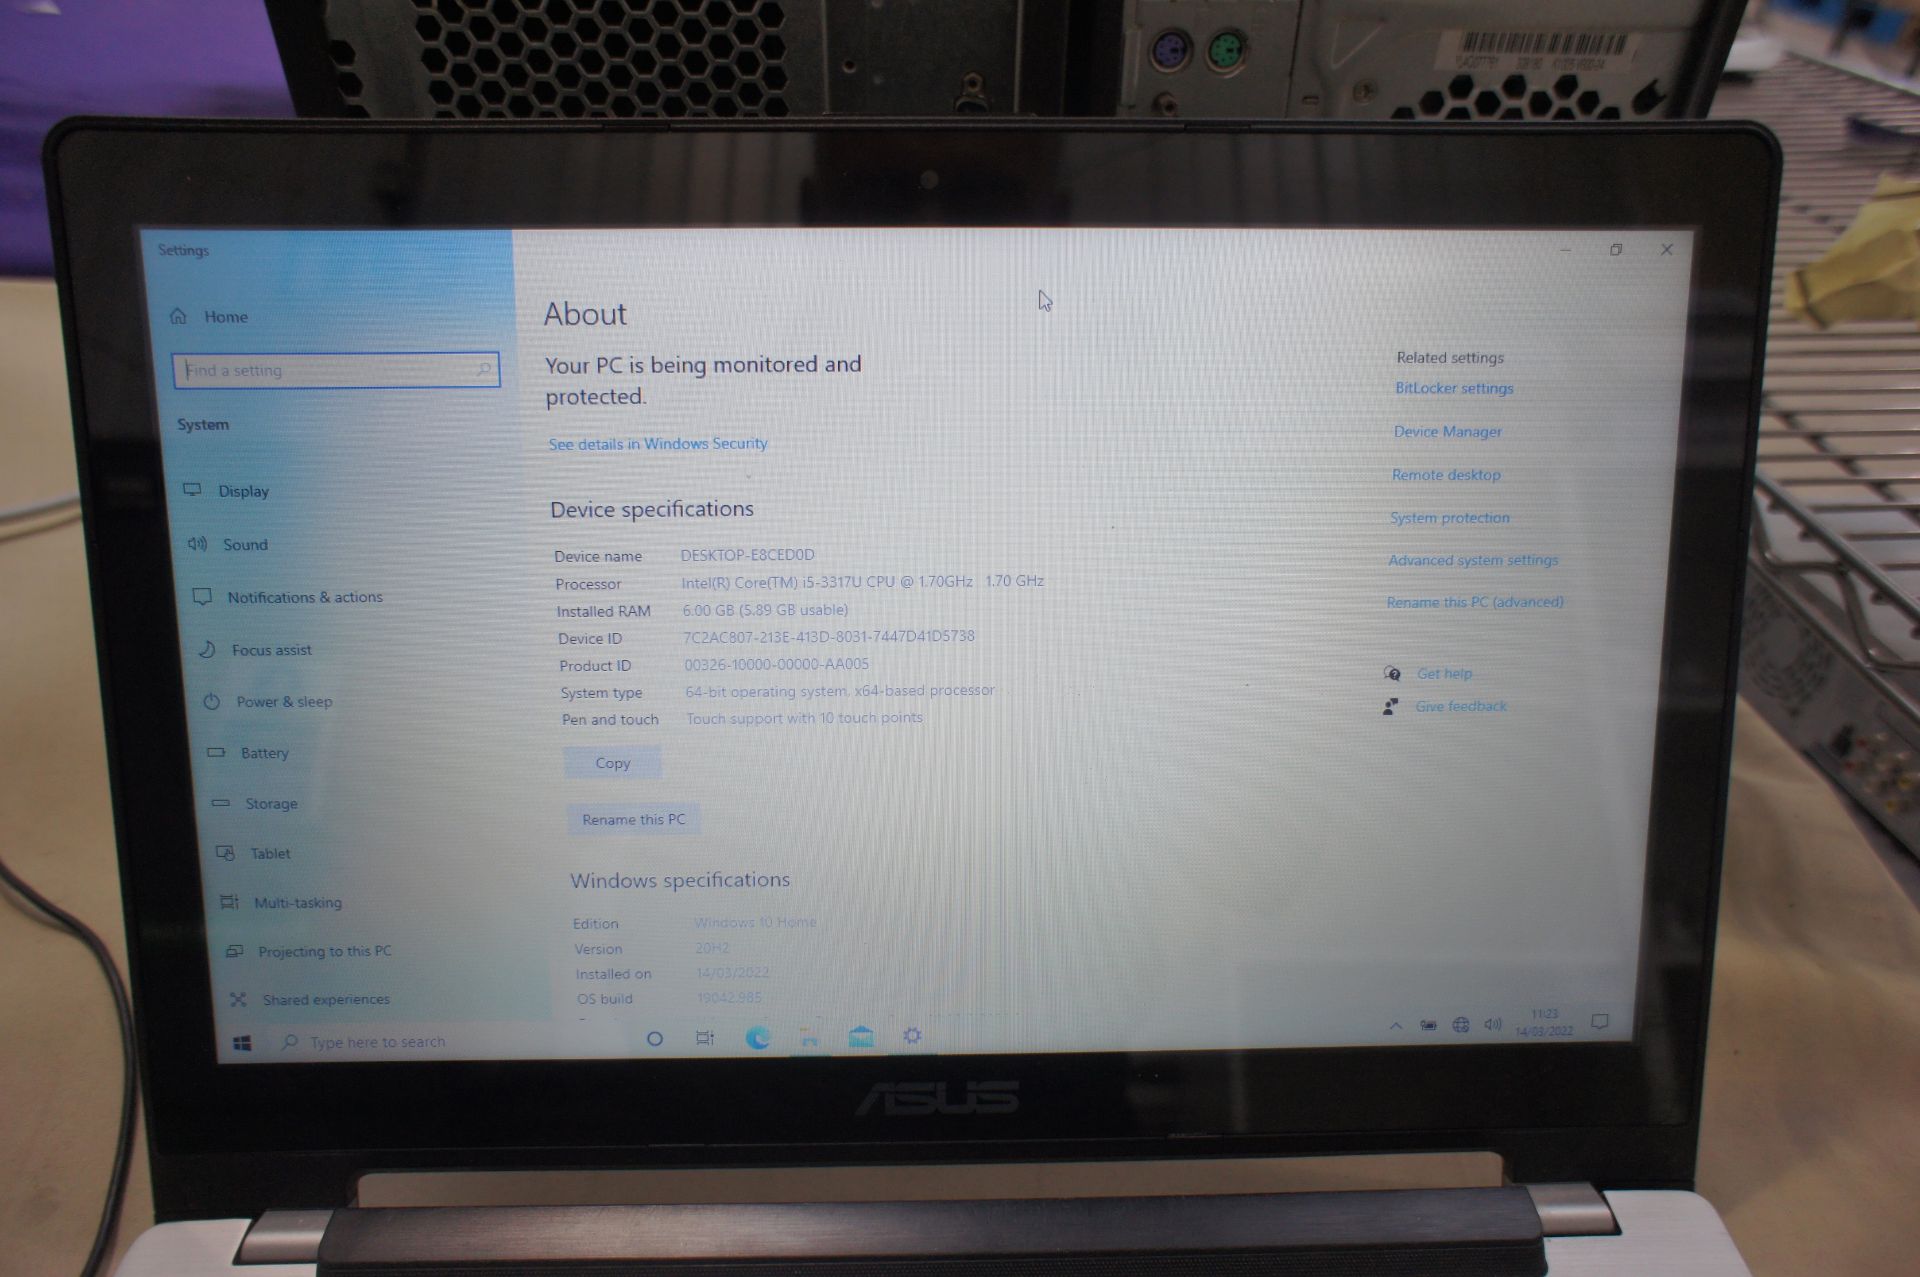 Acer Laptop Computer, Intel i5 Processor, 6GB Ram, 1TB Hard Drive, Windows 10 Home - Image 2 of 4